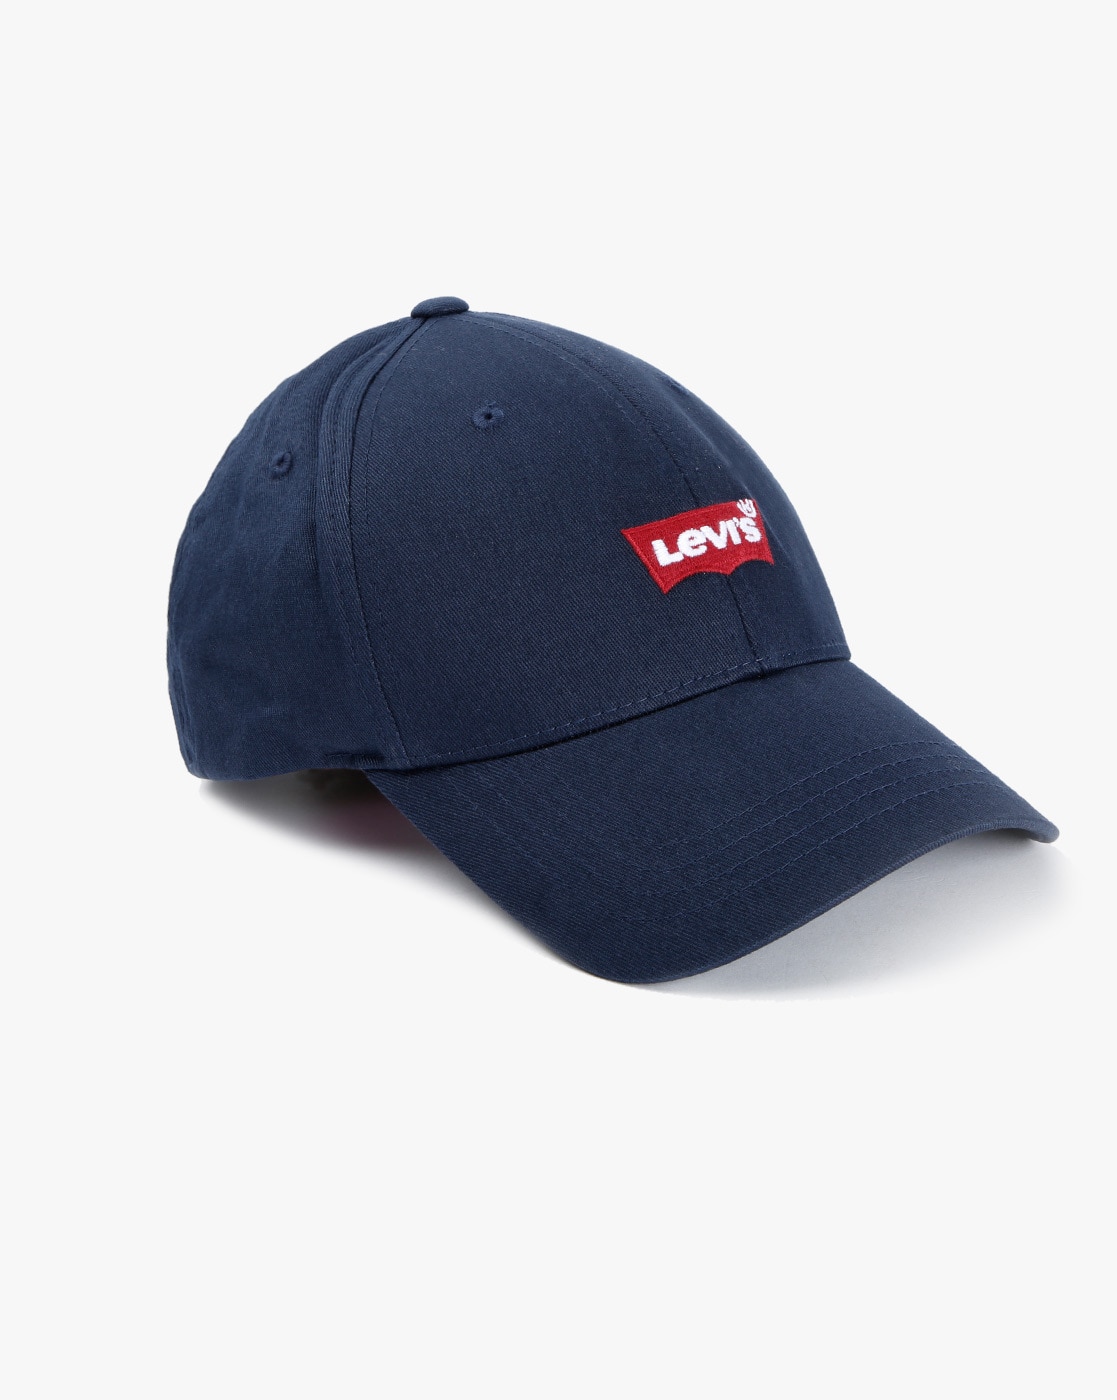 levi's hats